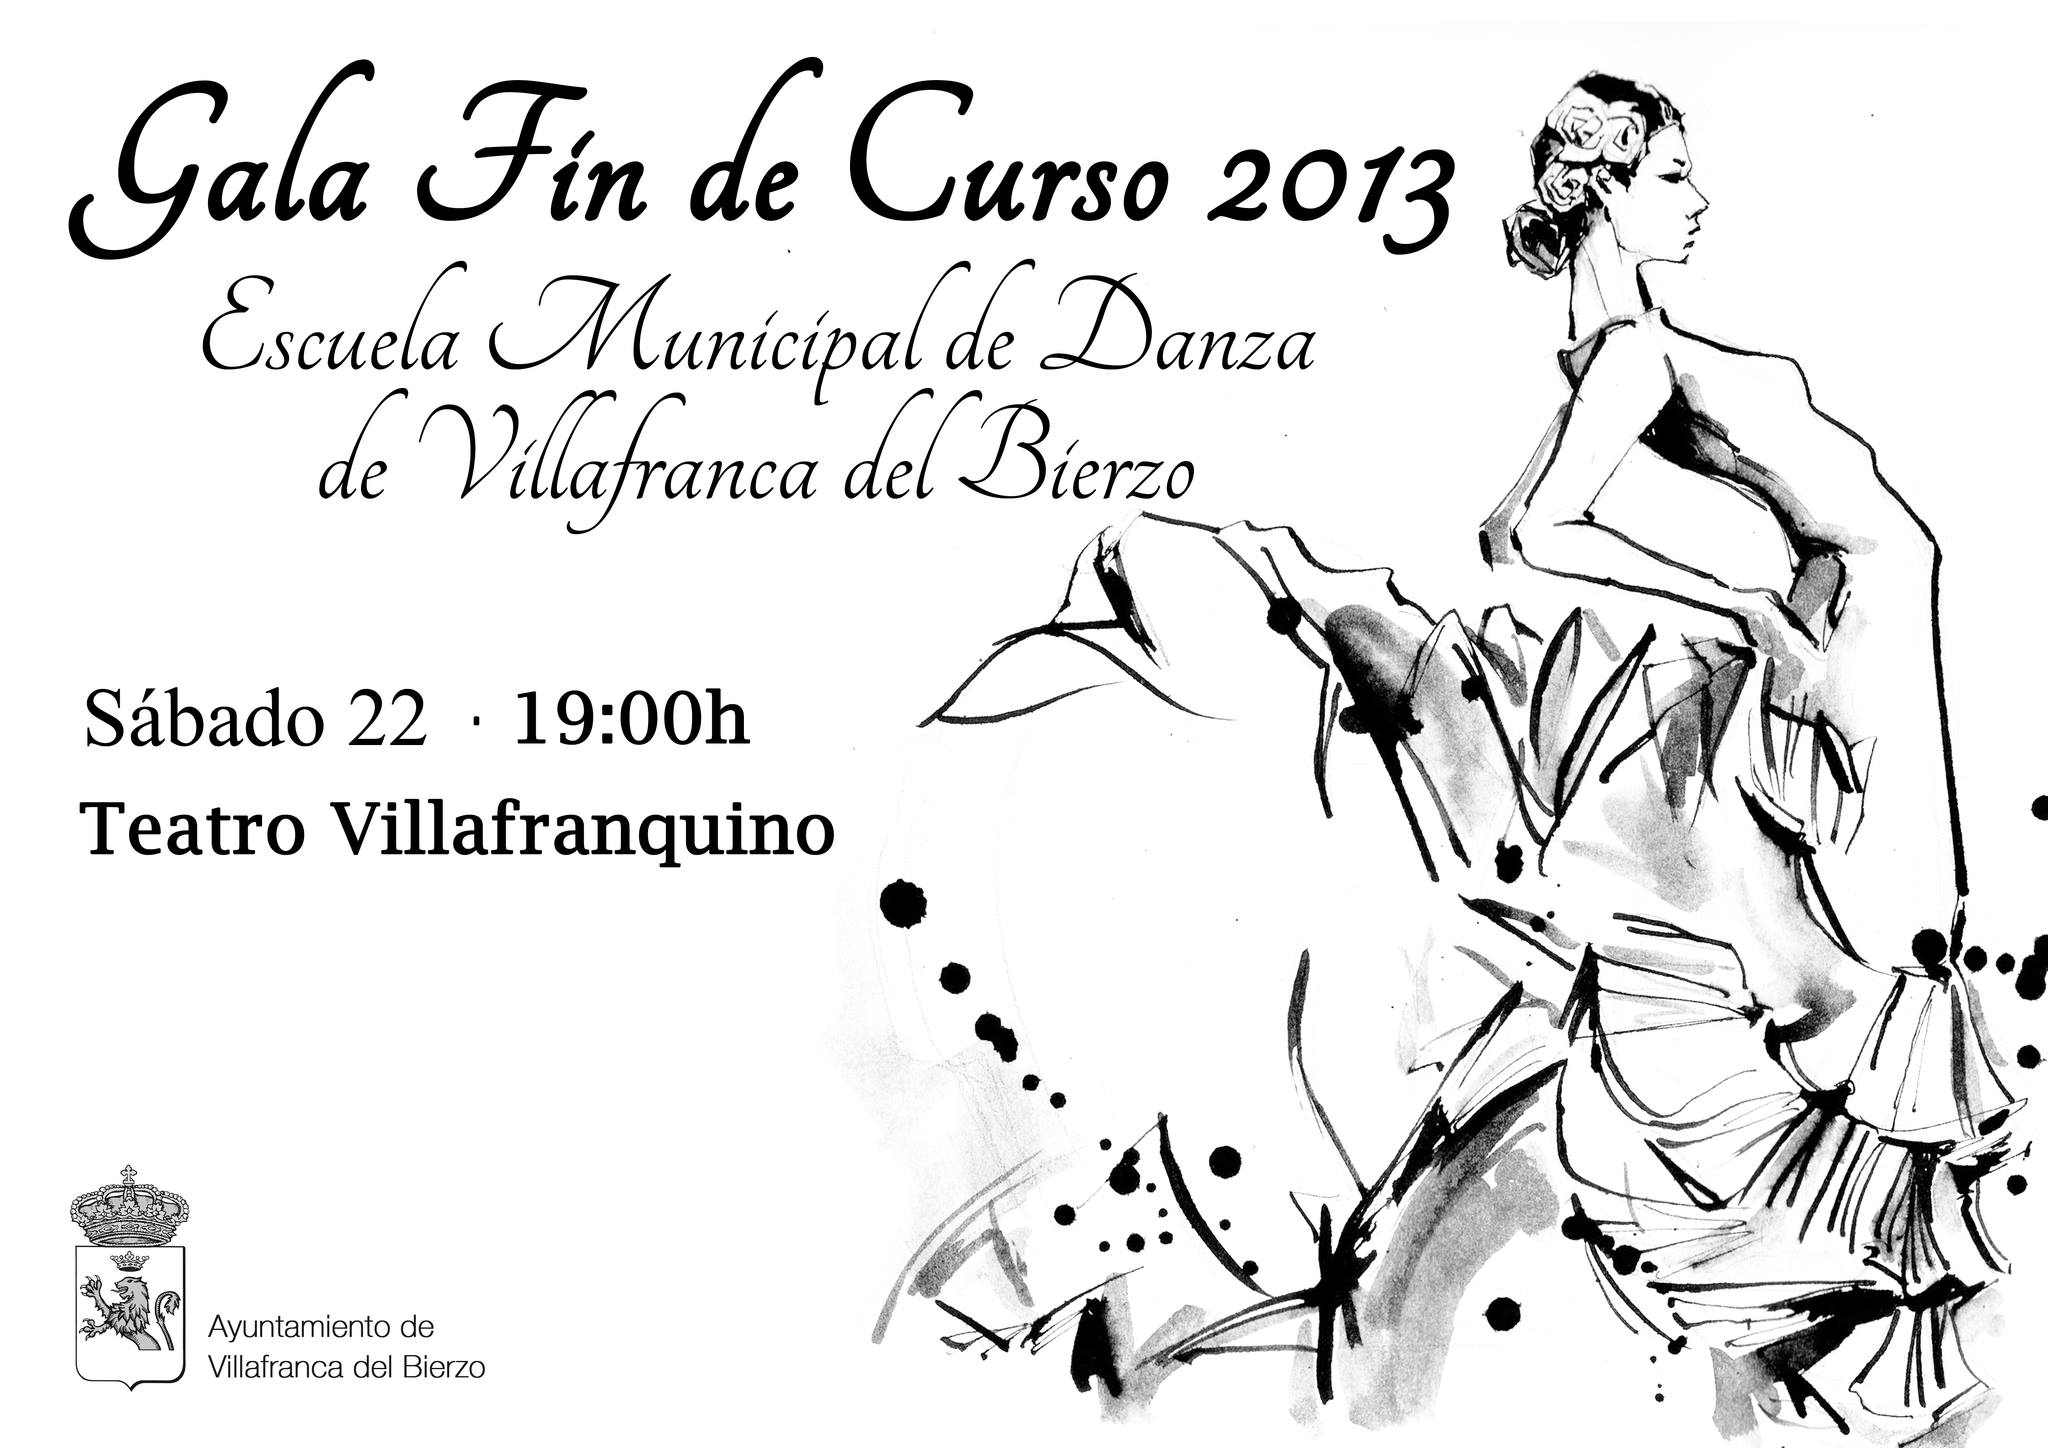 Gala Fin de Curso de la Escuela Municipal de Danza